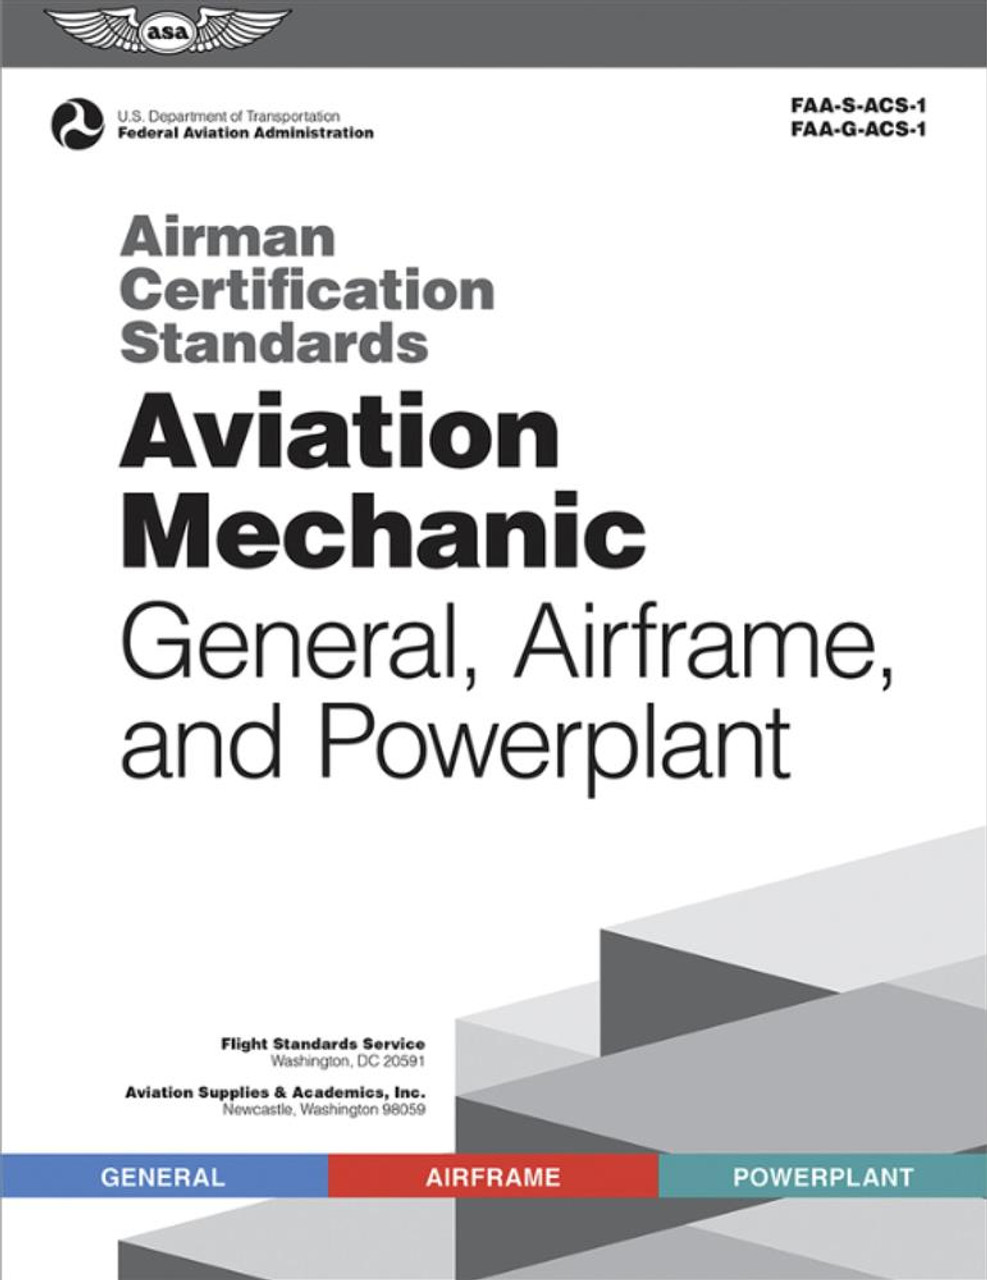 Aviation Mechanic Airman Certification Standards
ASA-ACS-1